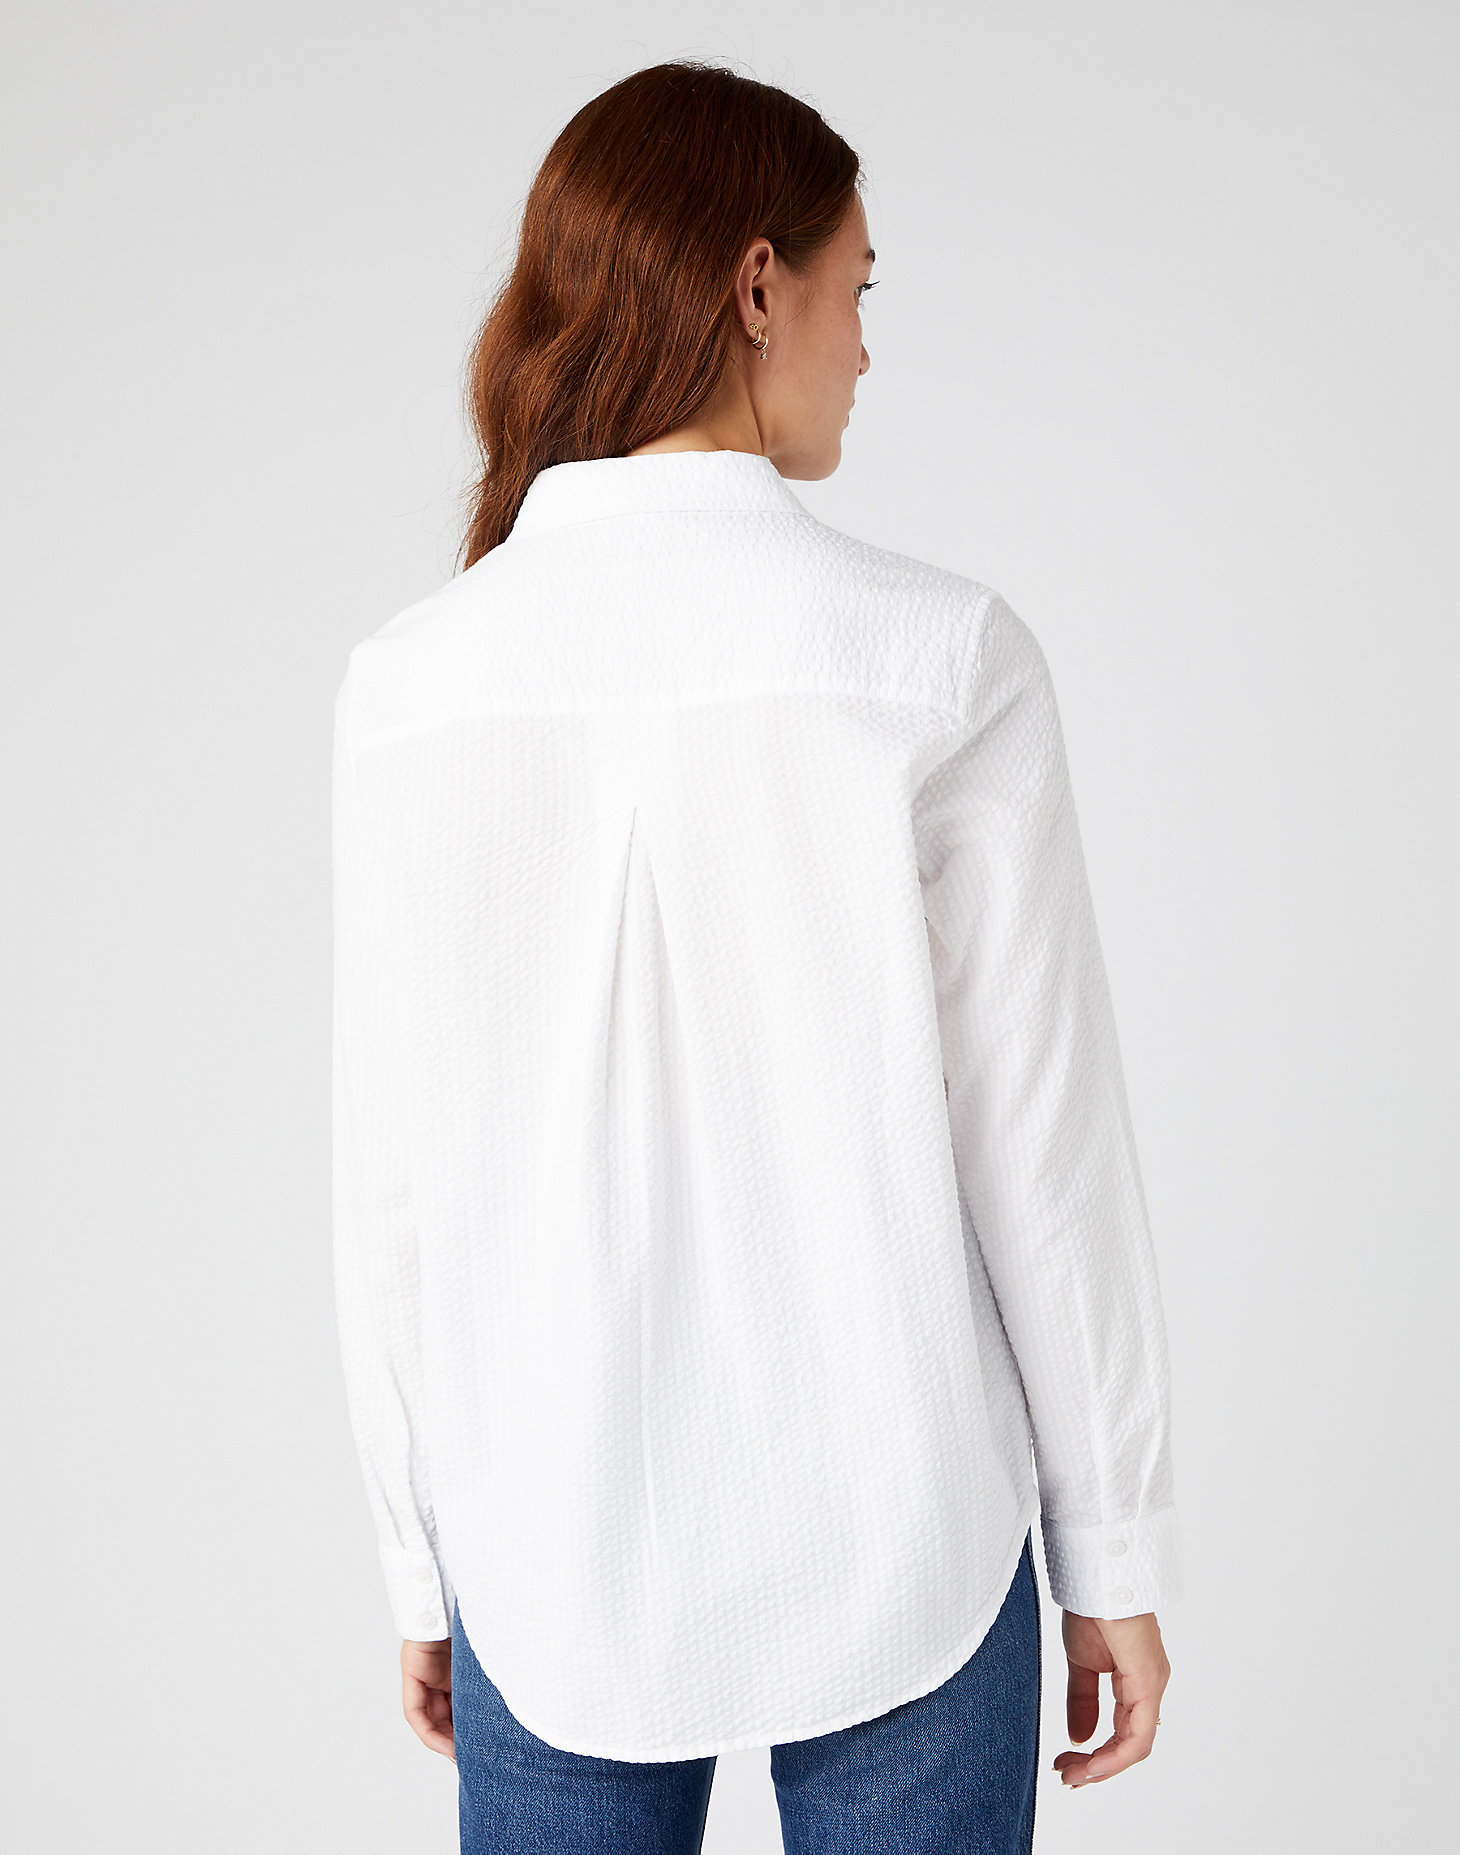 One Pocket Shirt in White alternative view 3